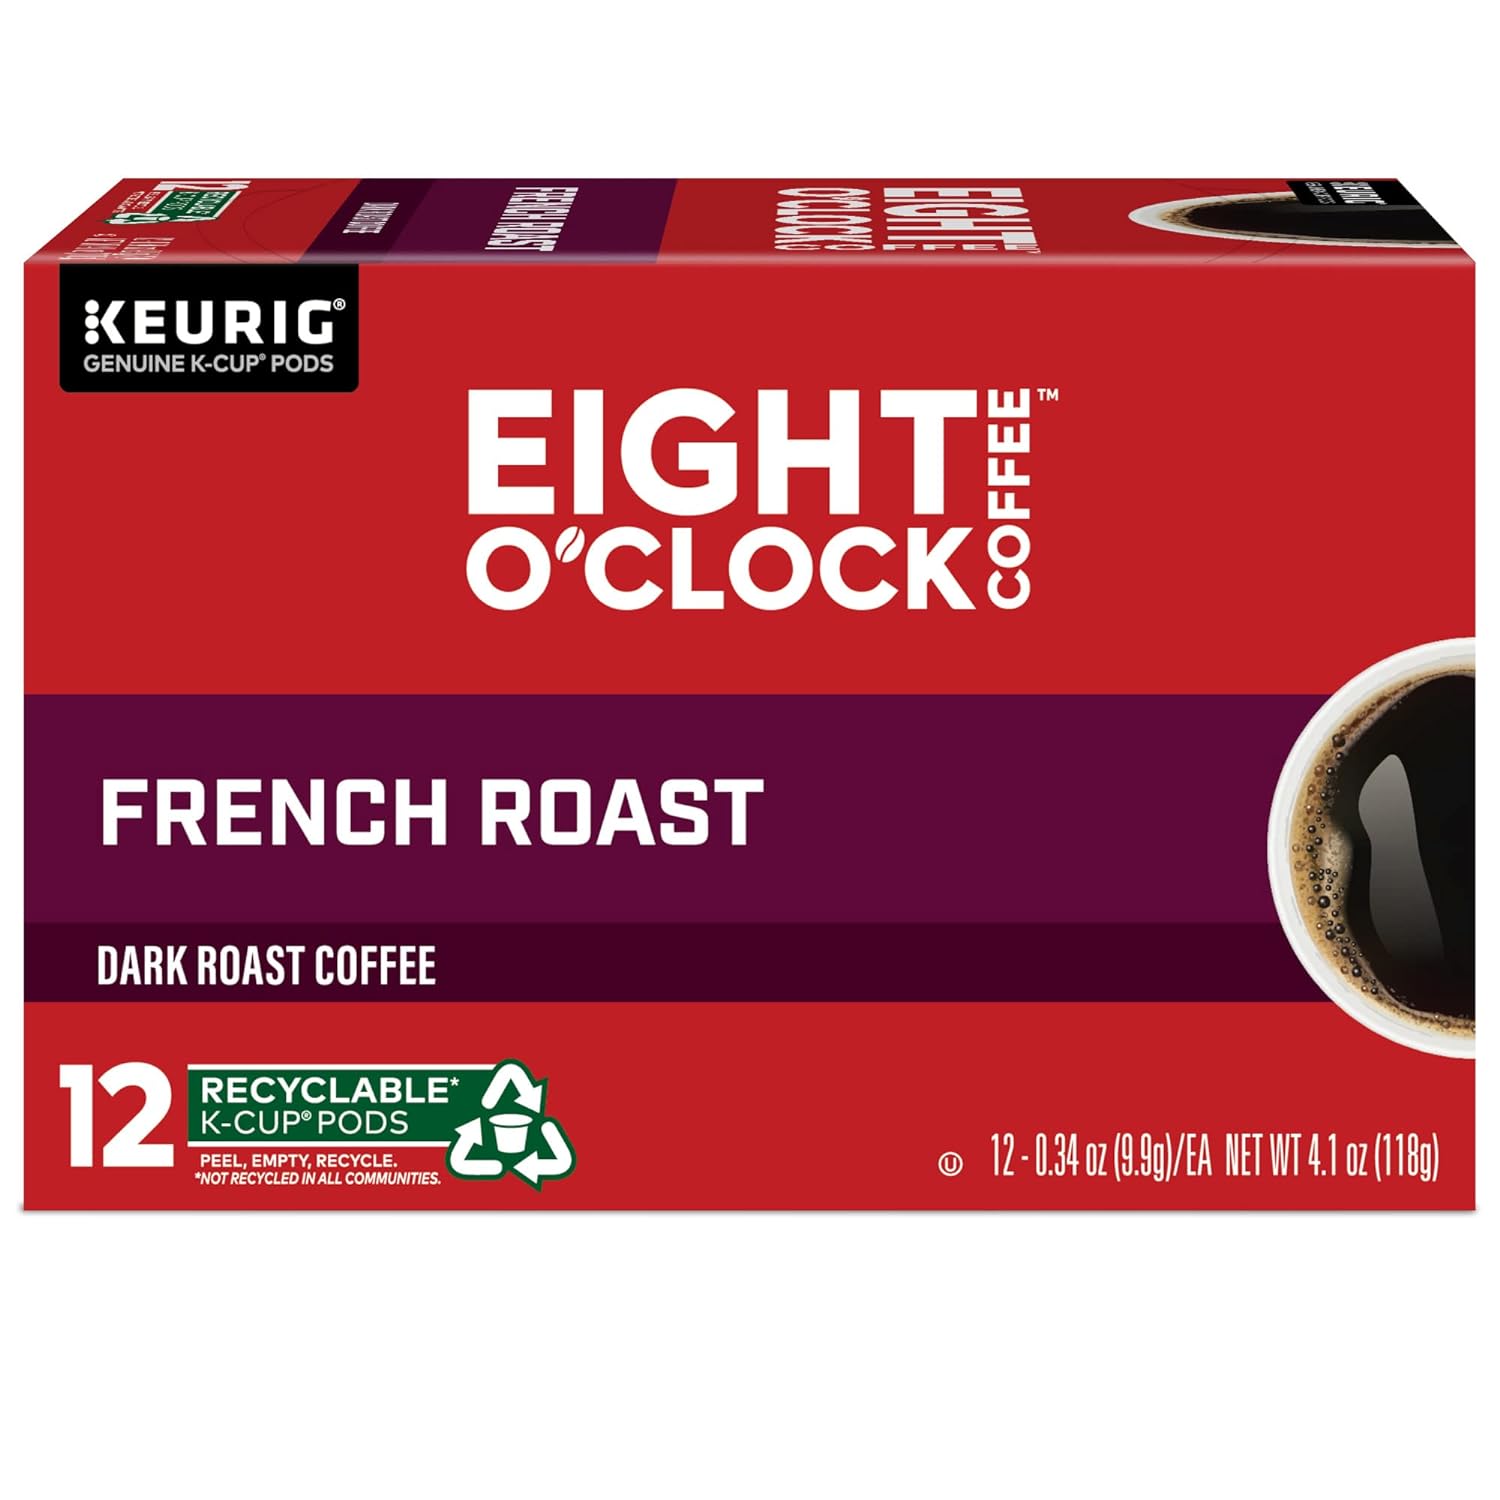 Eight O'Clock Coffee French Roast, Single-Serve Coffee K-Cup Pods, Dark Roast, 72 Count